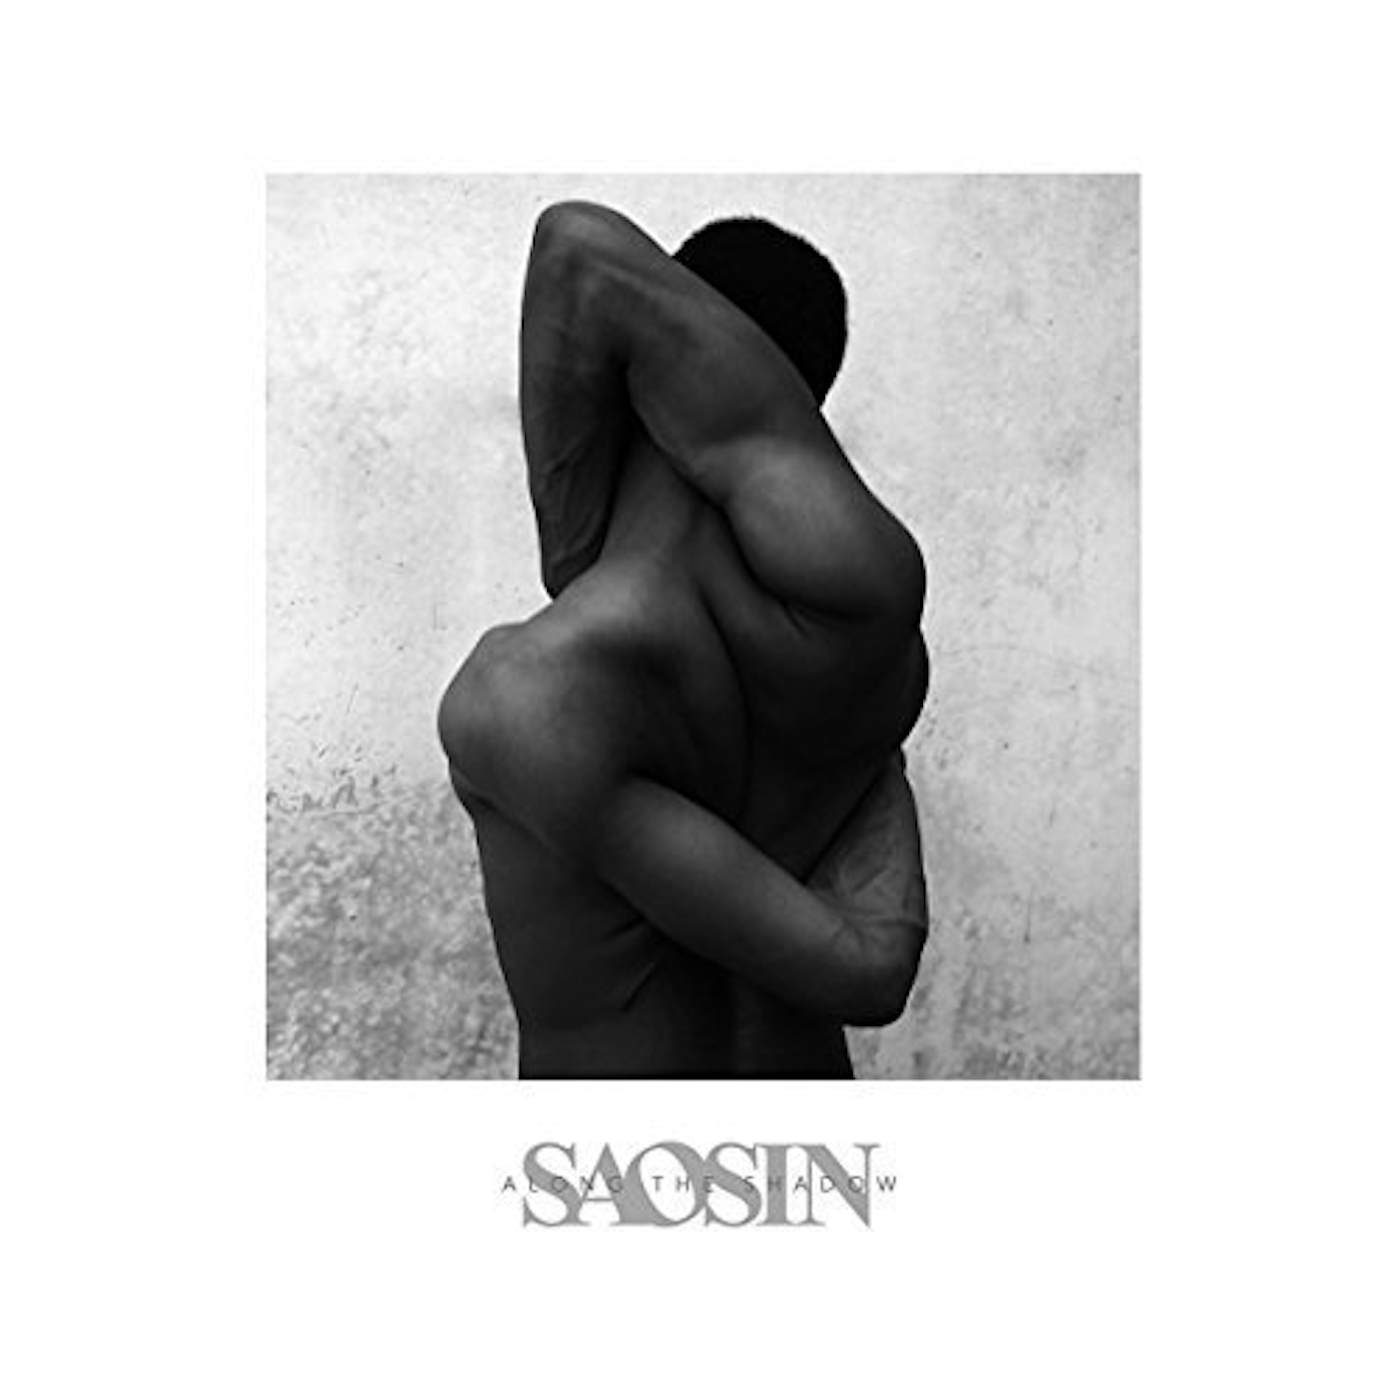 Saosin Along The Shadow Vinyl Record